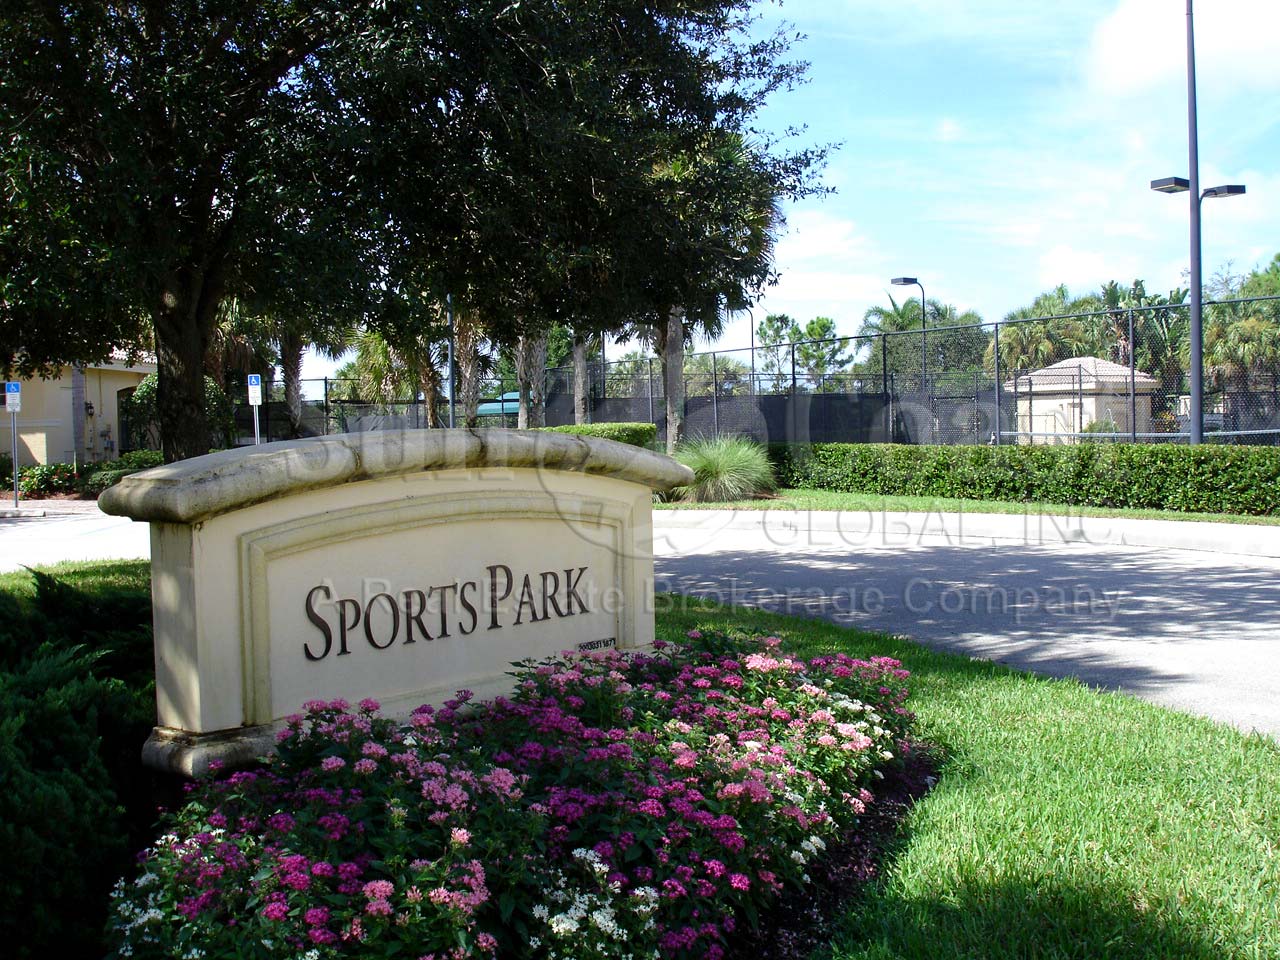 SATURNIA LAKES Sports Park Entrance